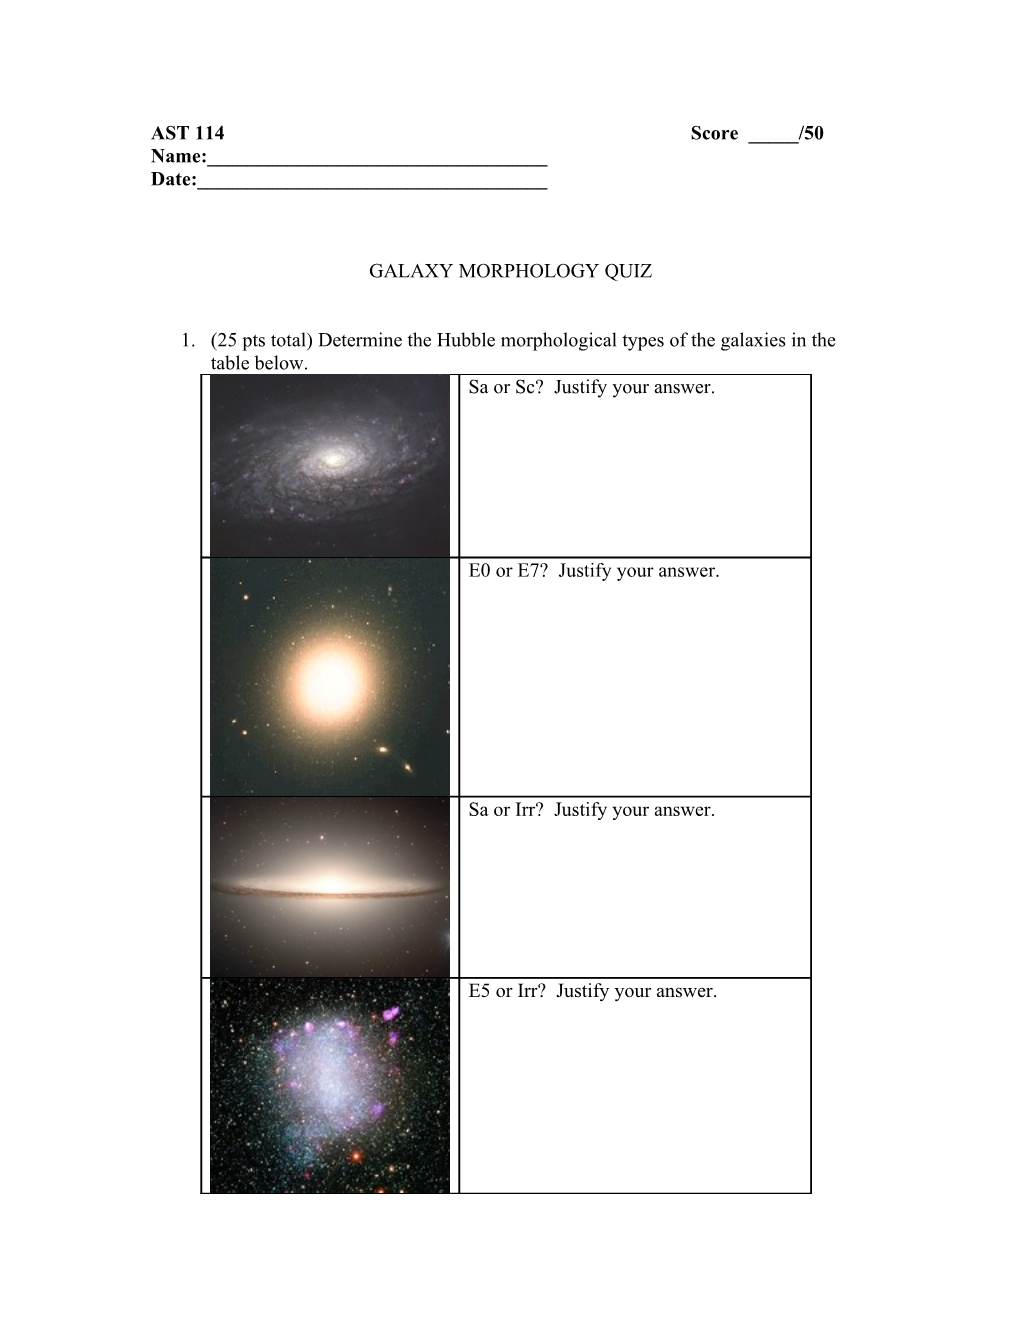 Galaxy Morphology Quiz